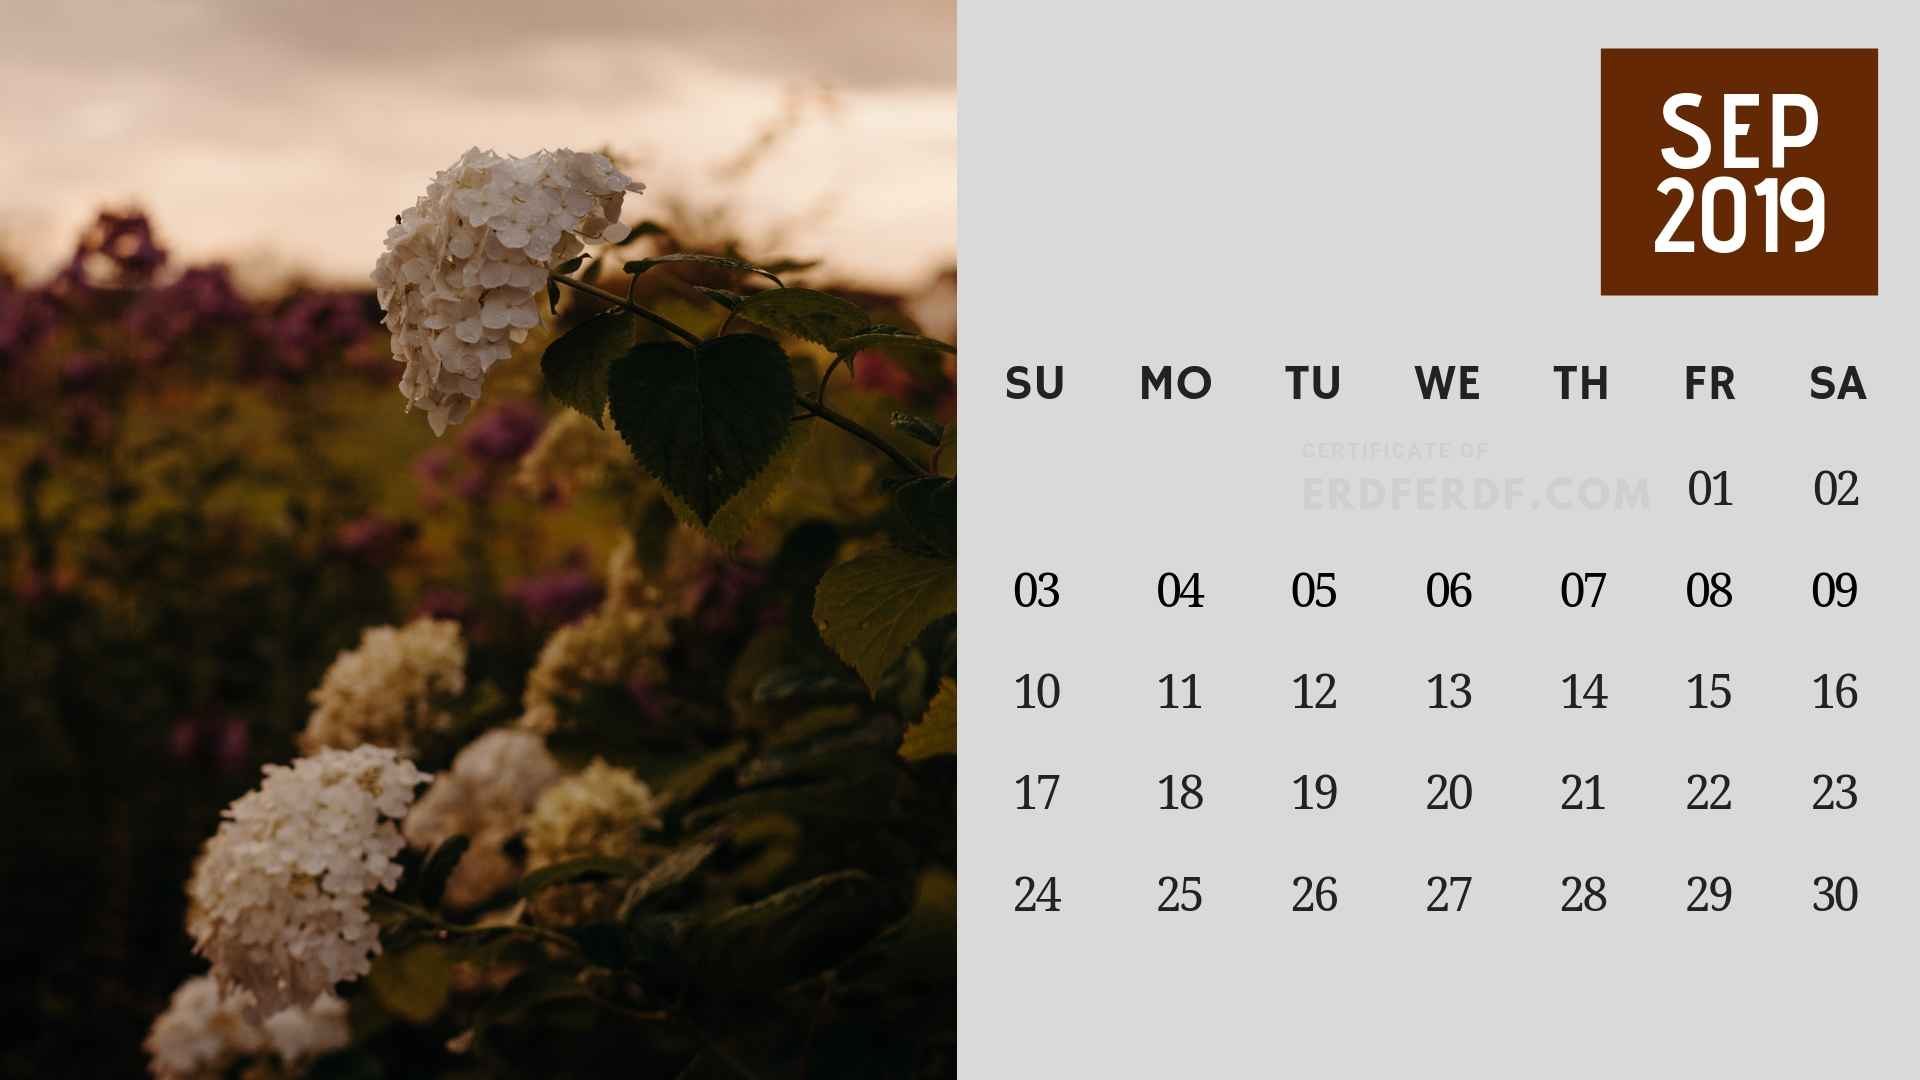 Календарь 6 сентября. Календарь на октябрь Эстетика. Календарь сентябрь на заставку. Красивый эстетичный календарь. Календарь на сентябрь эстетичный.